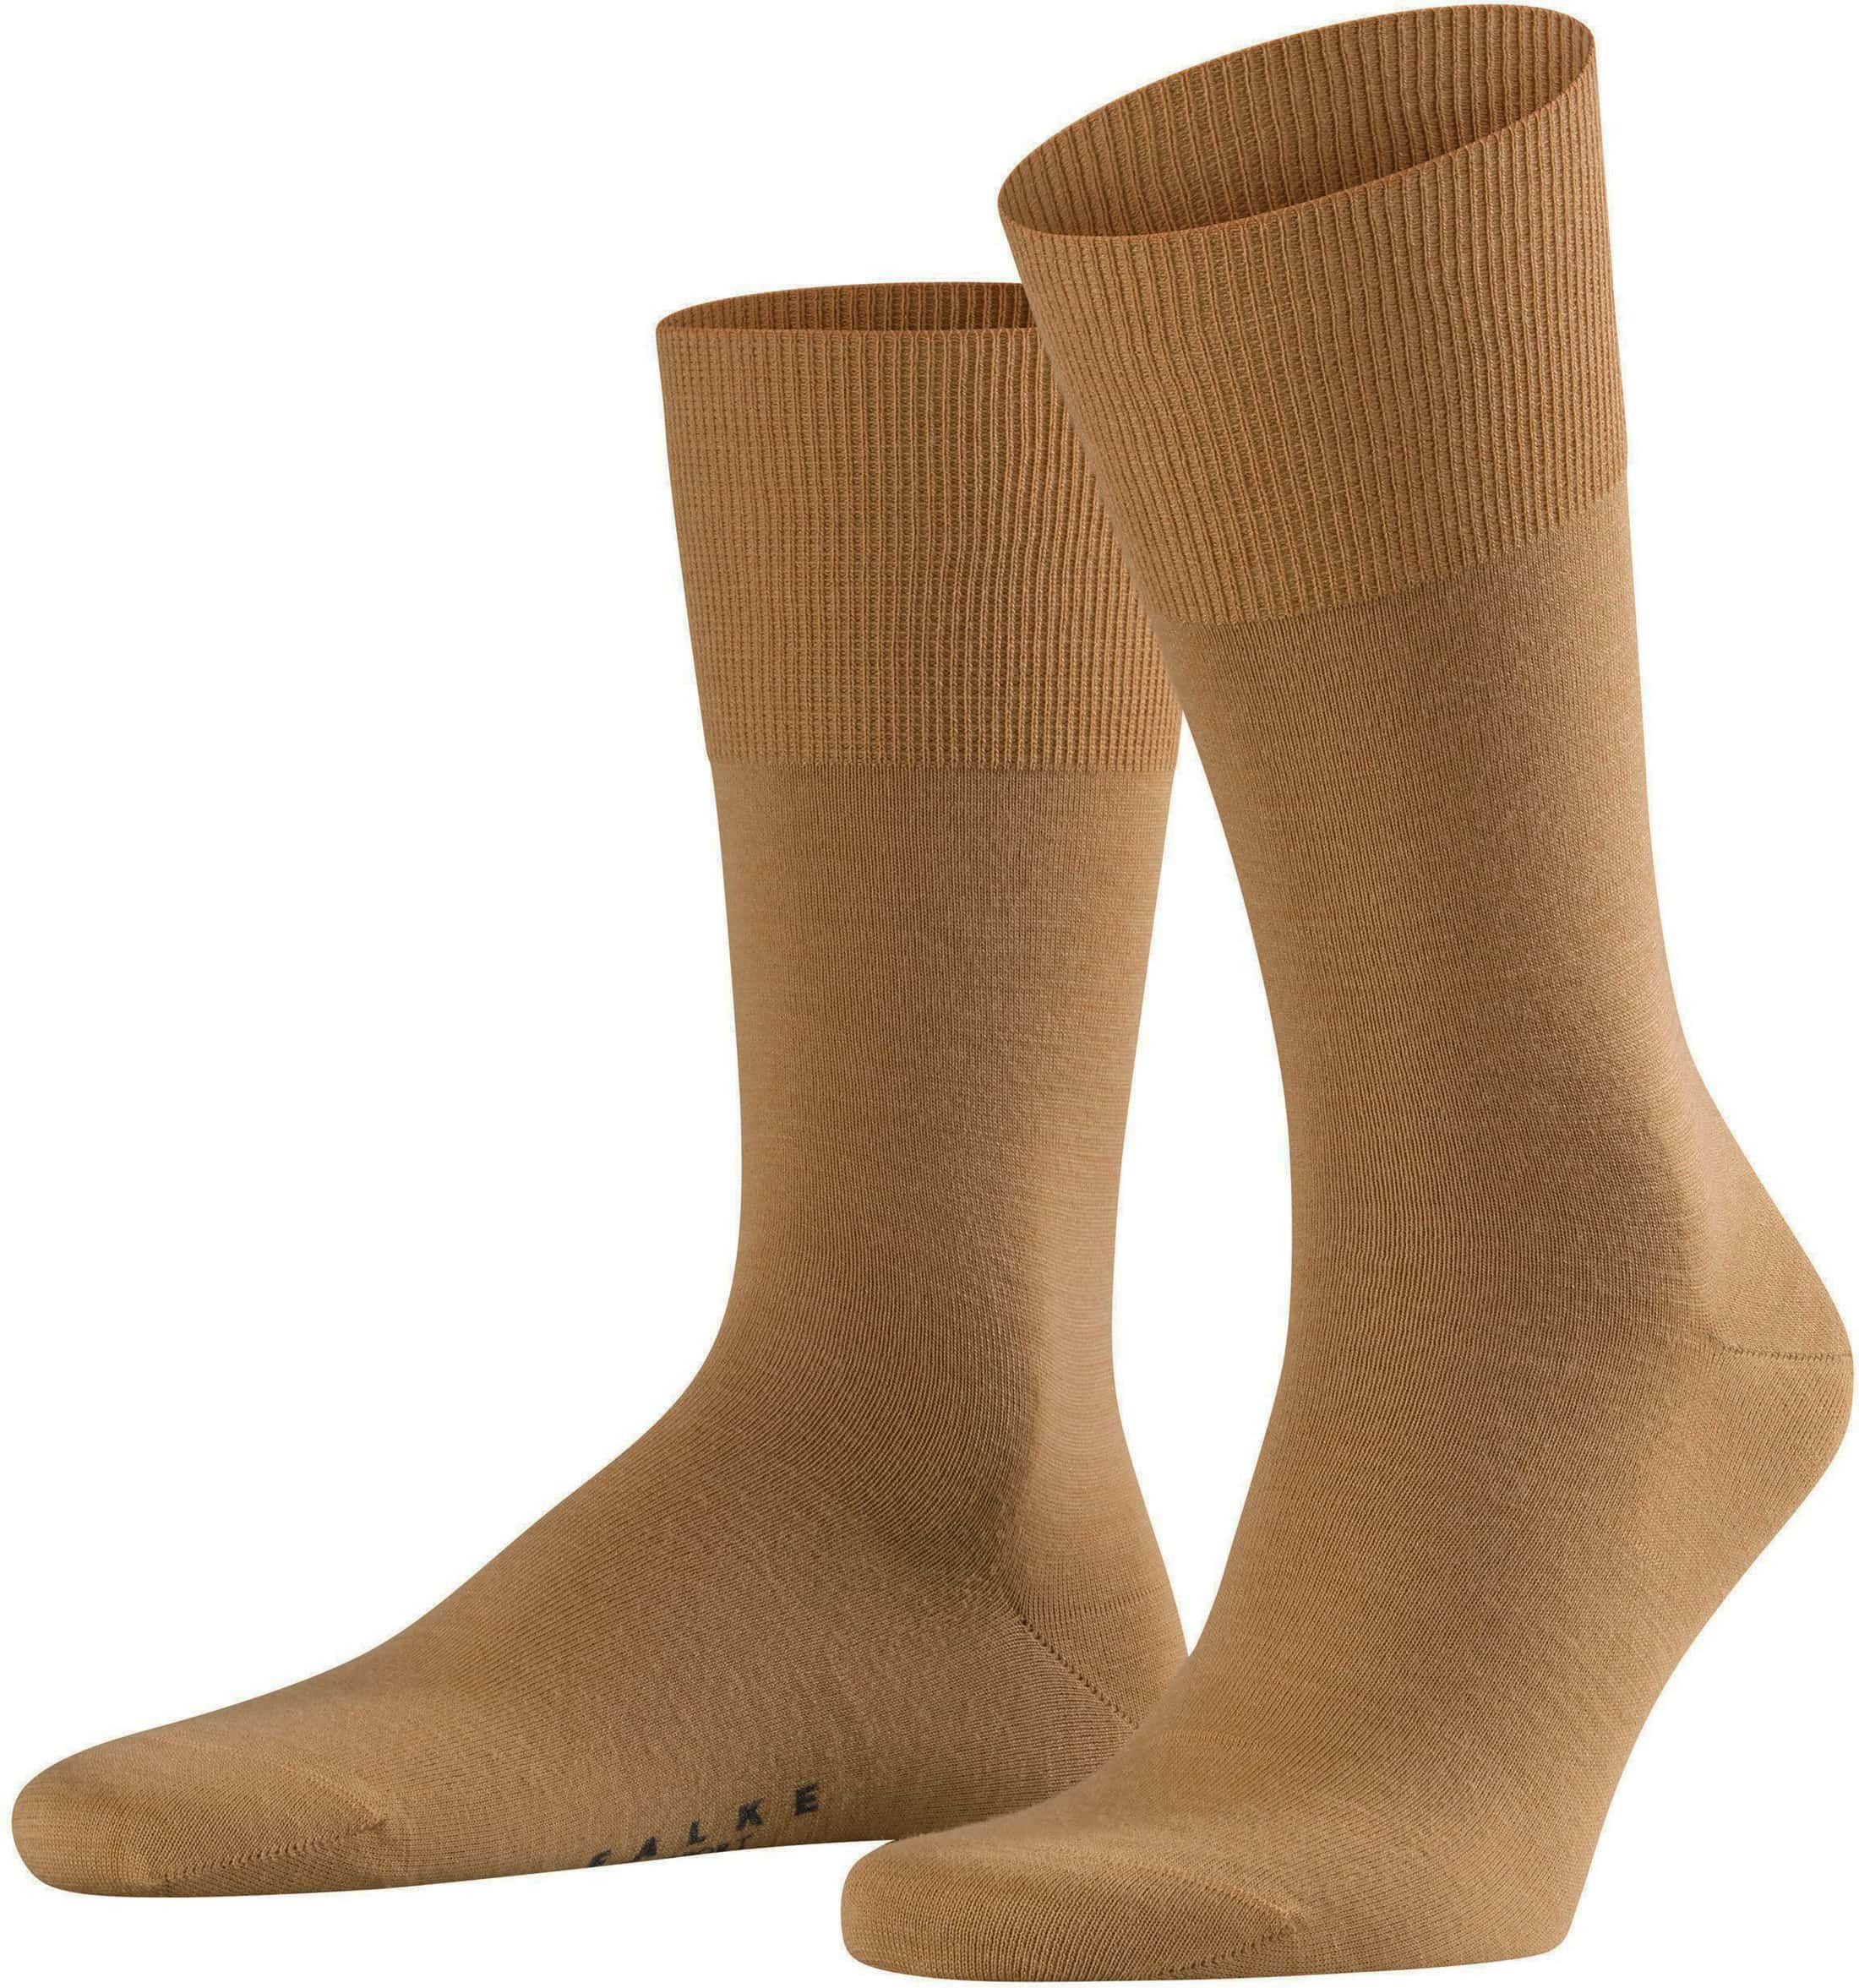 Falke Airport Sock 5152 Brown size 39-40